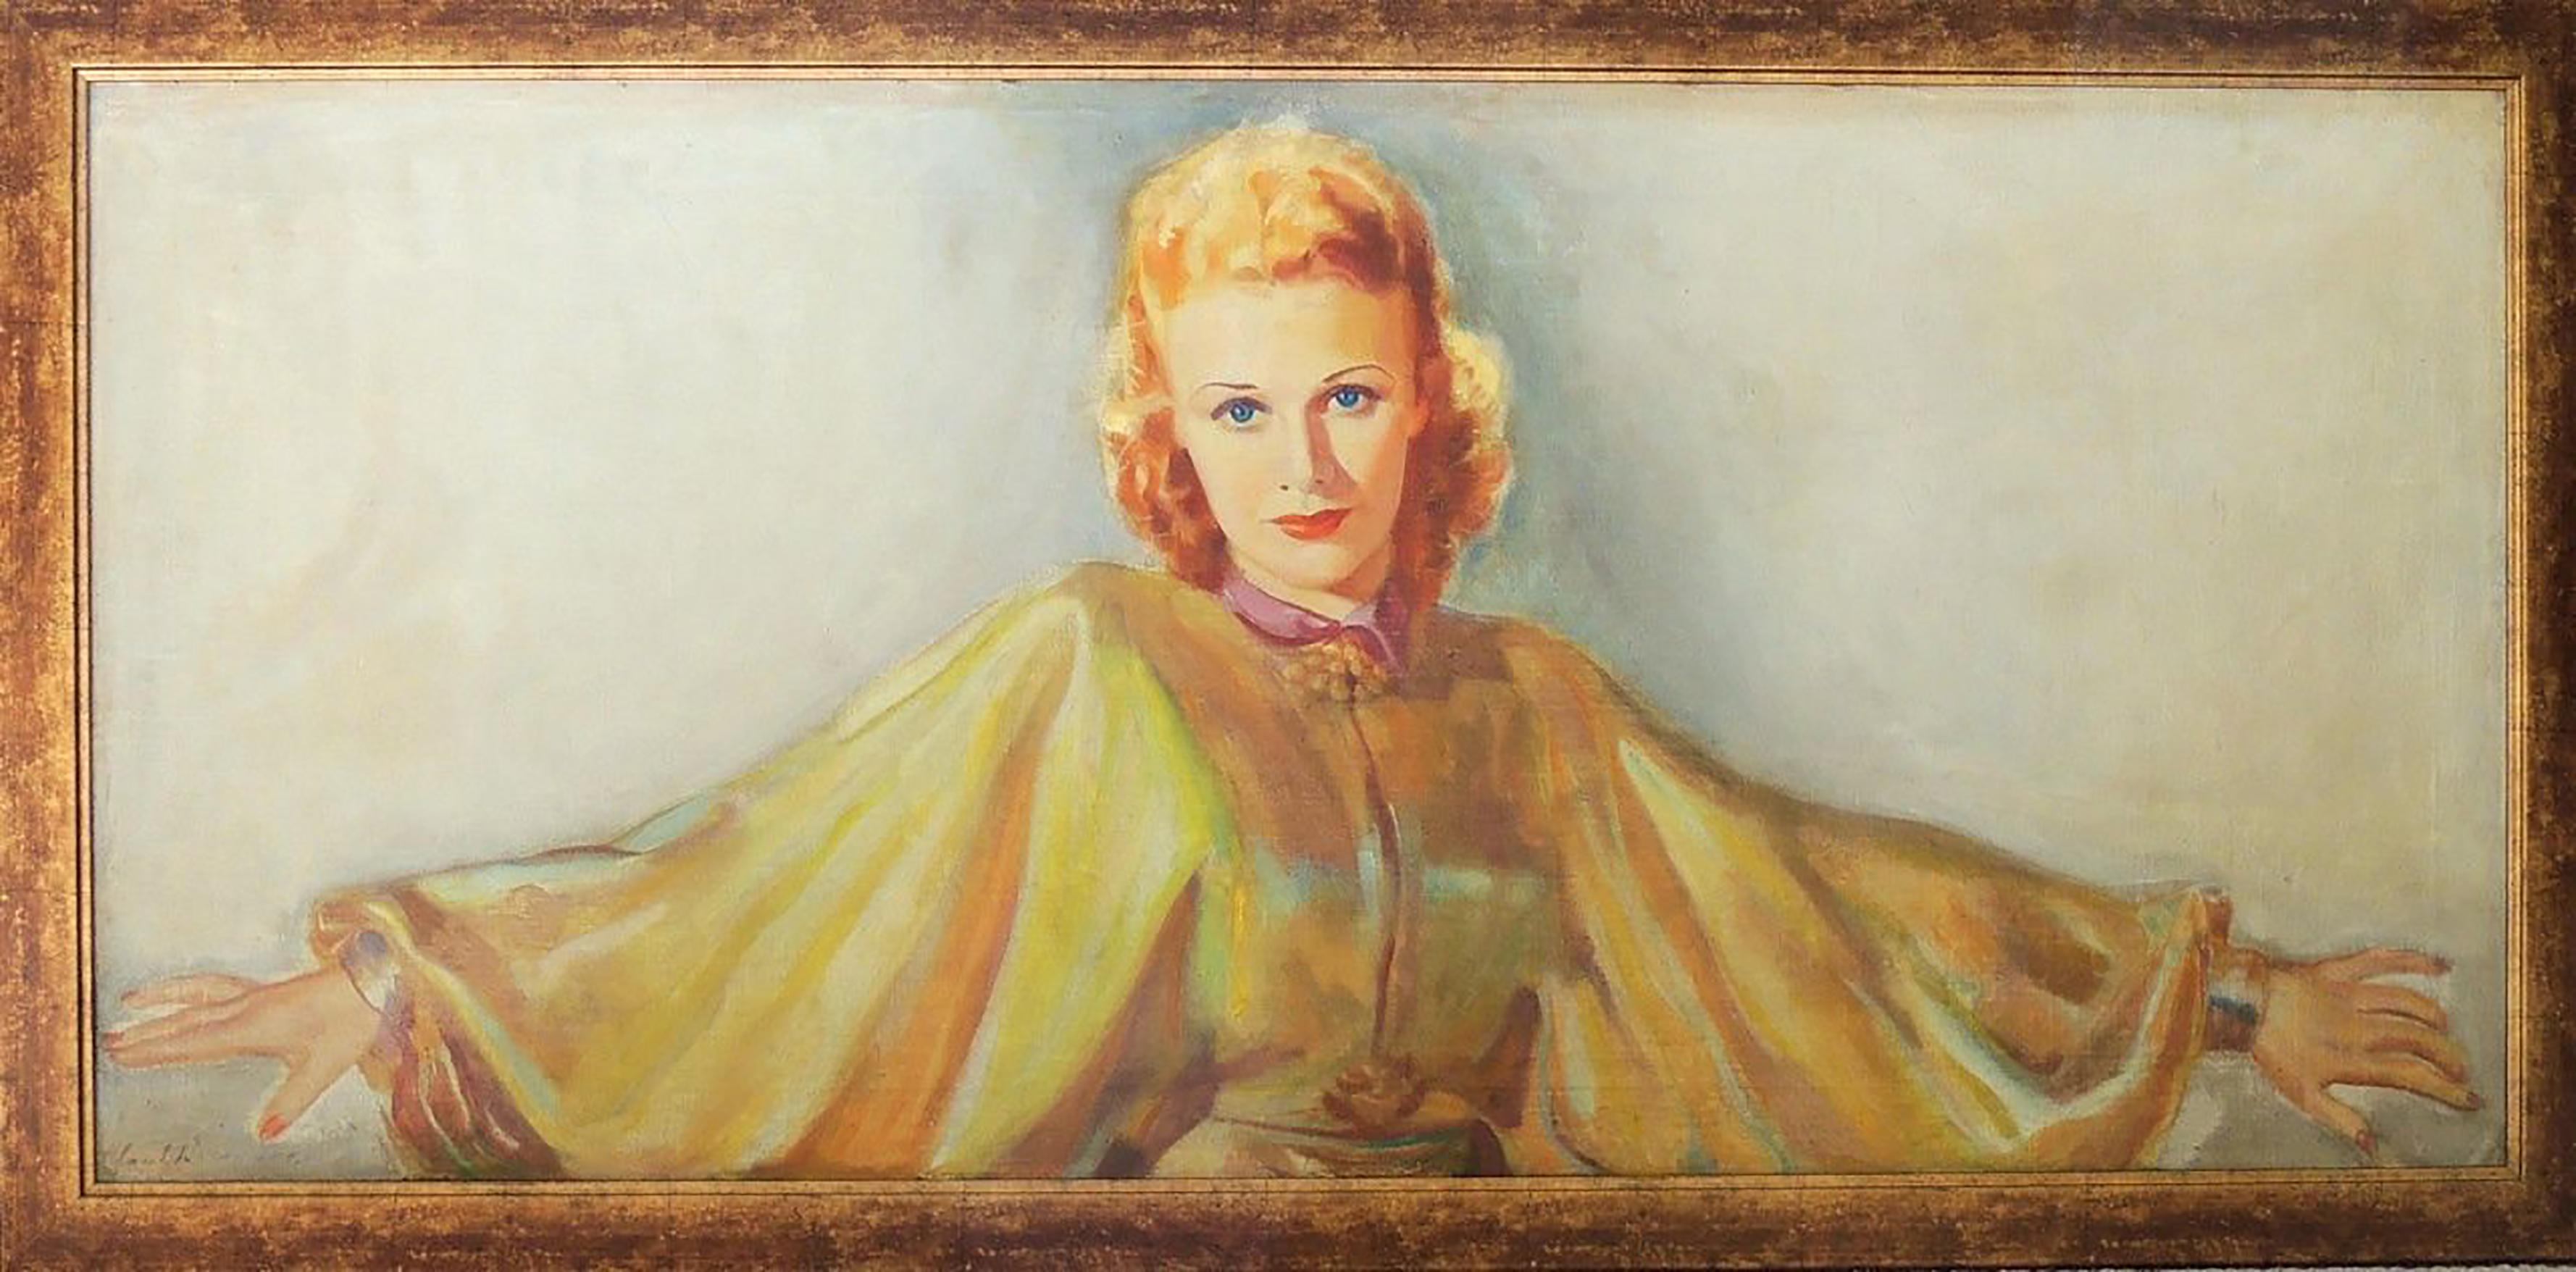 'Roberta' Movie Art Poster, 1935 - Painting by Jacob Rosenberg